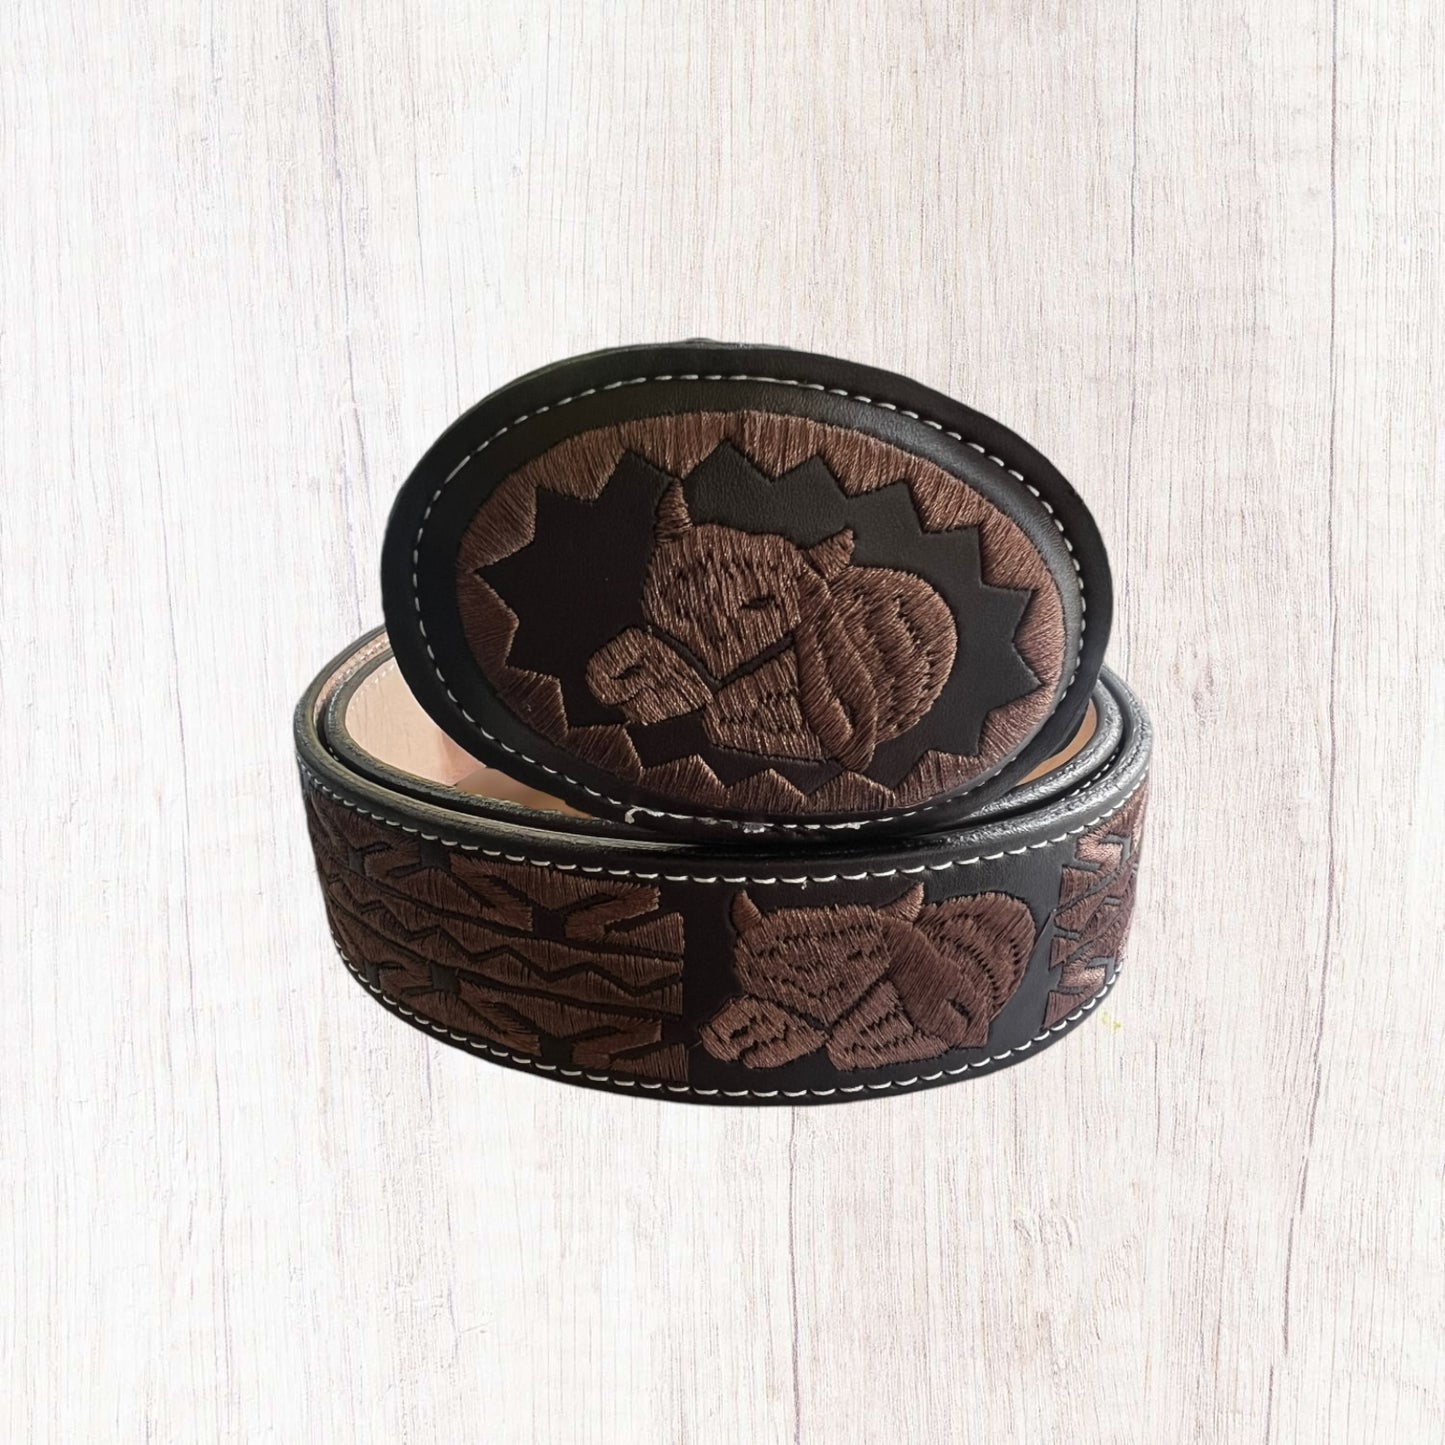 Cintó Bordado/Embroidered Belt